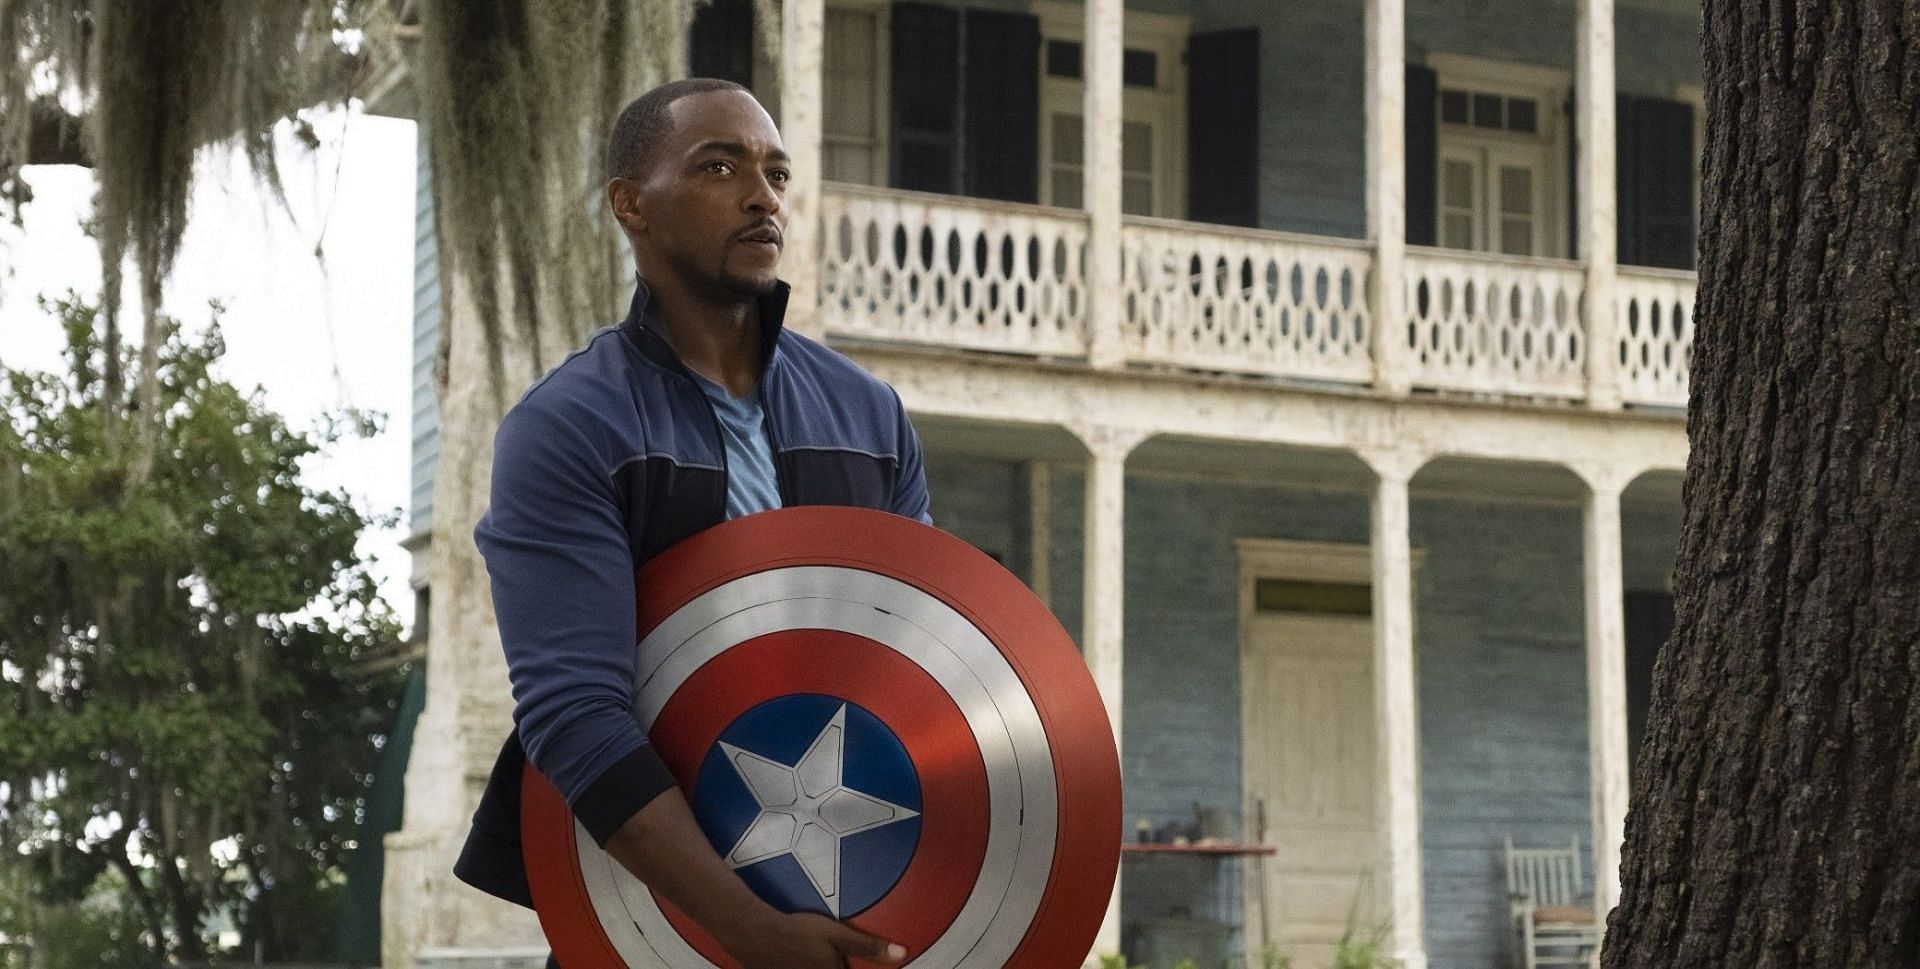 Sam Wilson as Captain America standing strong, representing a new era of diversity and representation in superhero stories (Image via Marvel Studios)